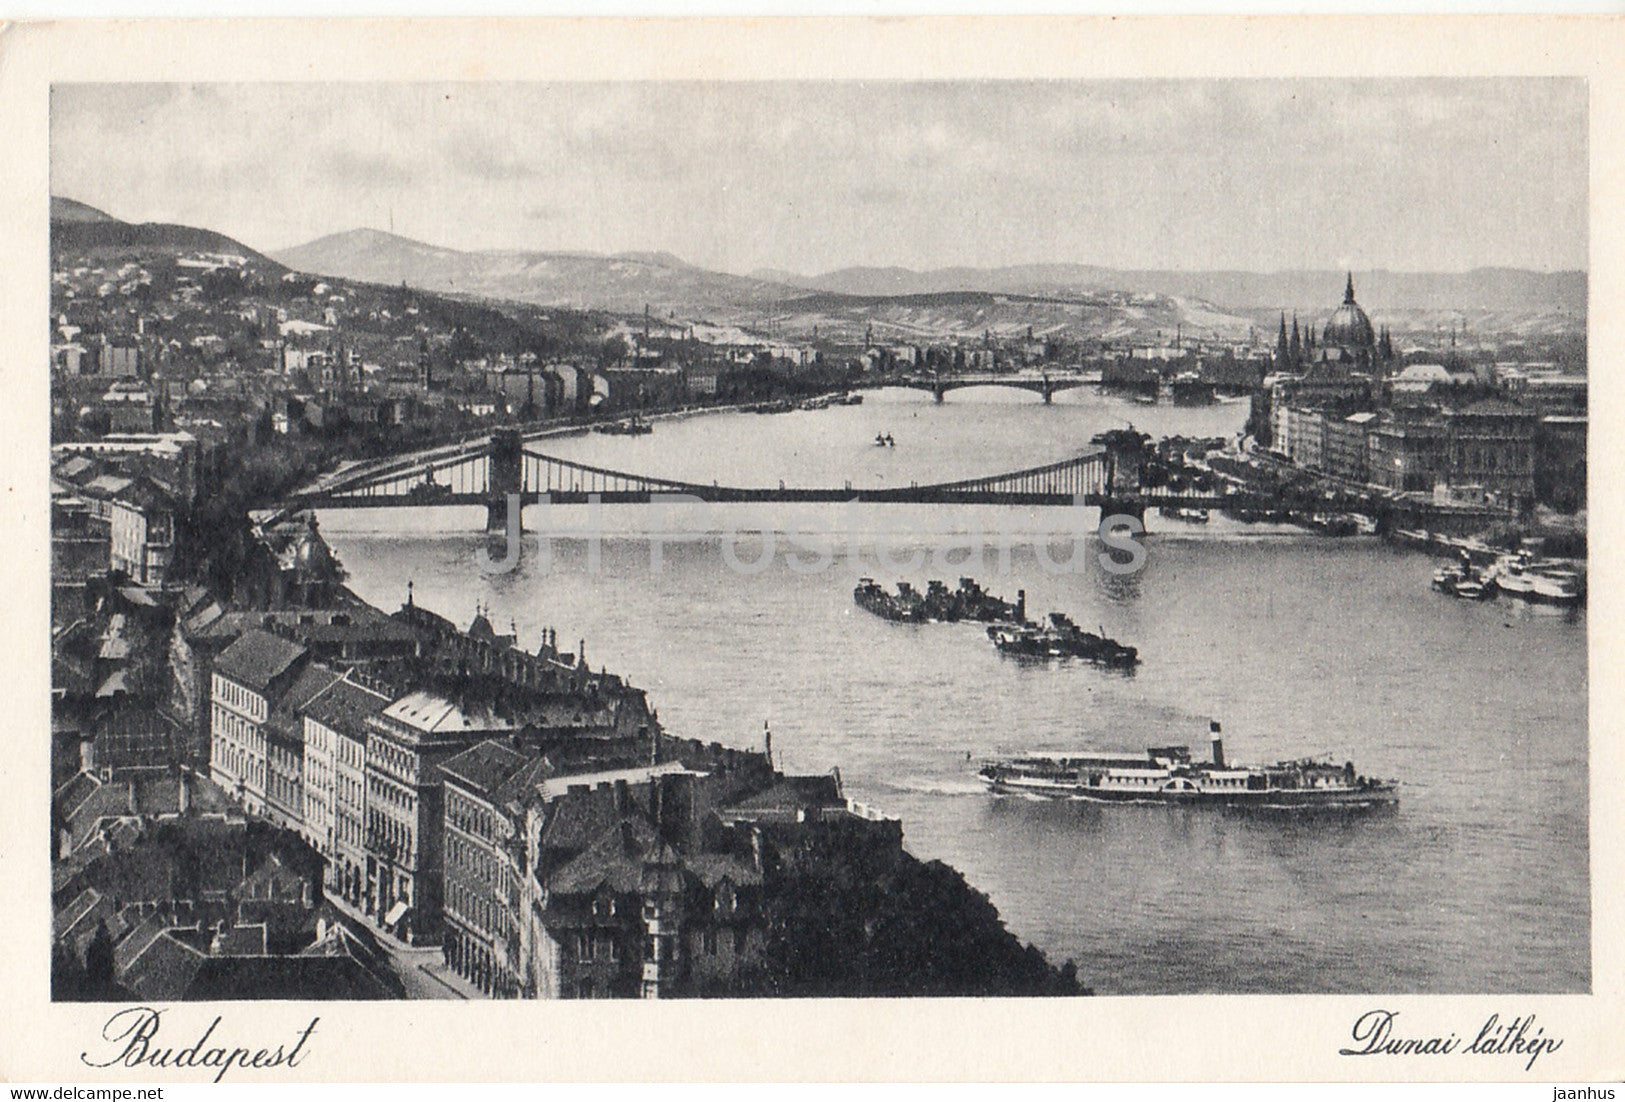 Budapest - Dunai Latkep - Donau Ansicht - bridge - ship - old postcard - Hungary - unused - JH Postcards